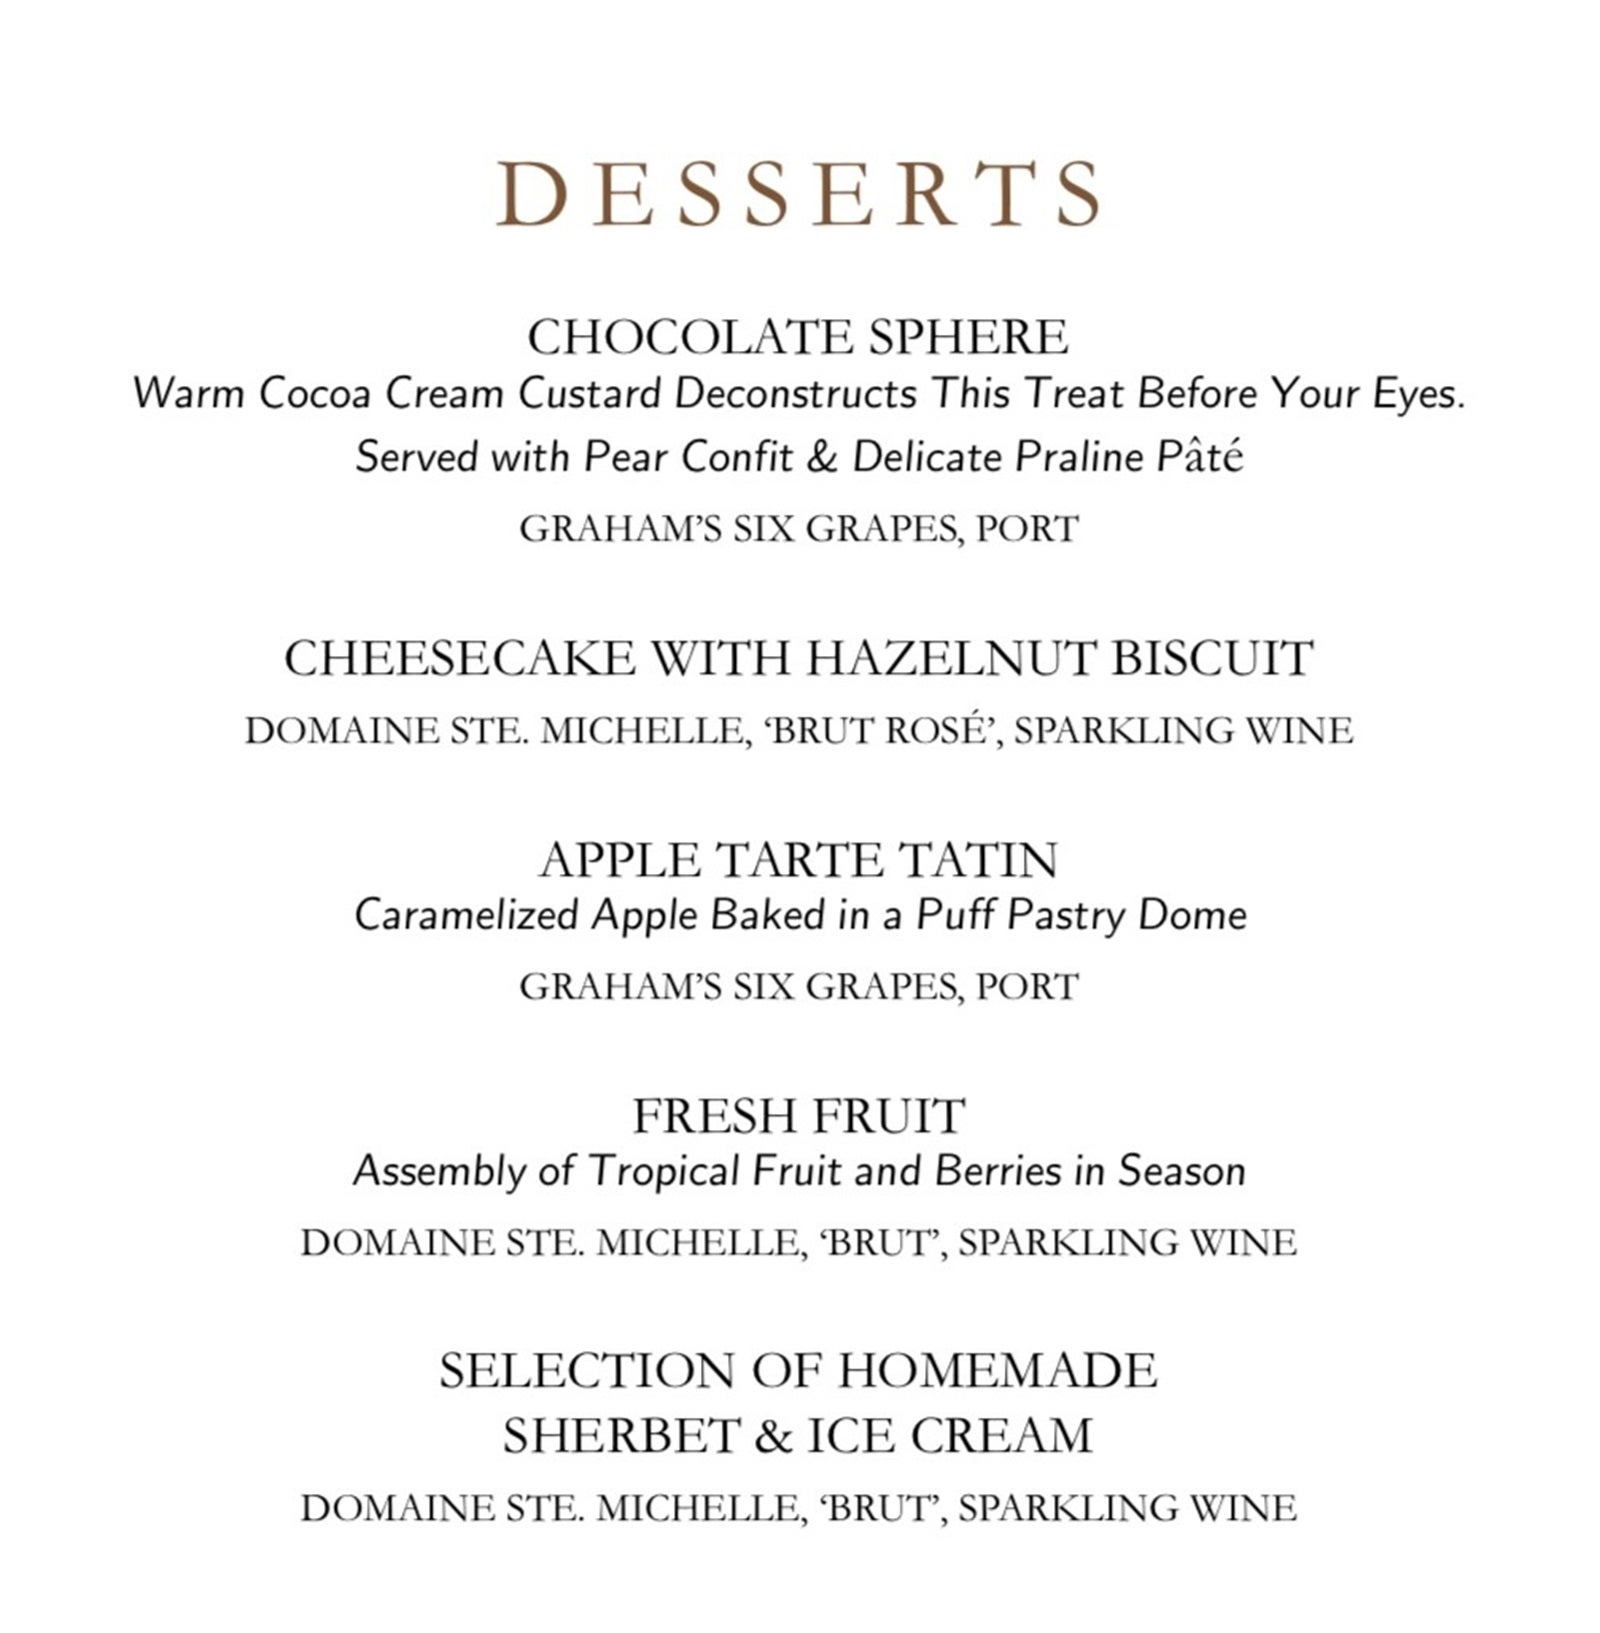 A steakhouse menu listing desserts